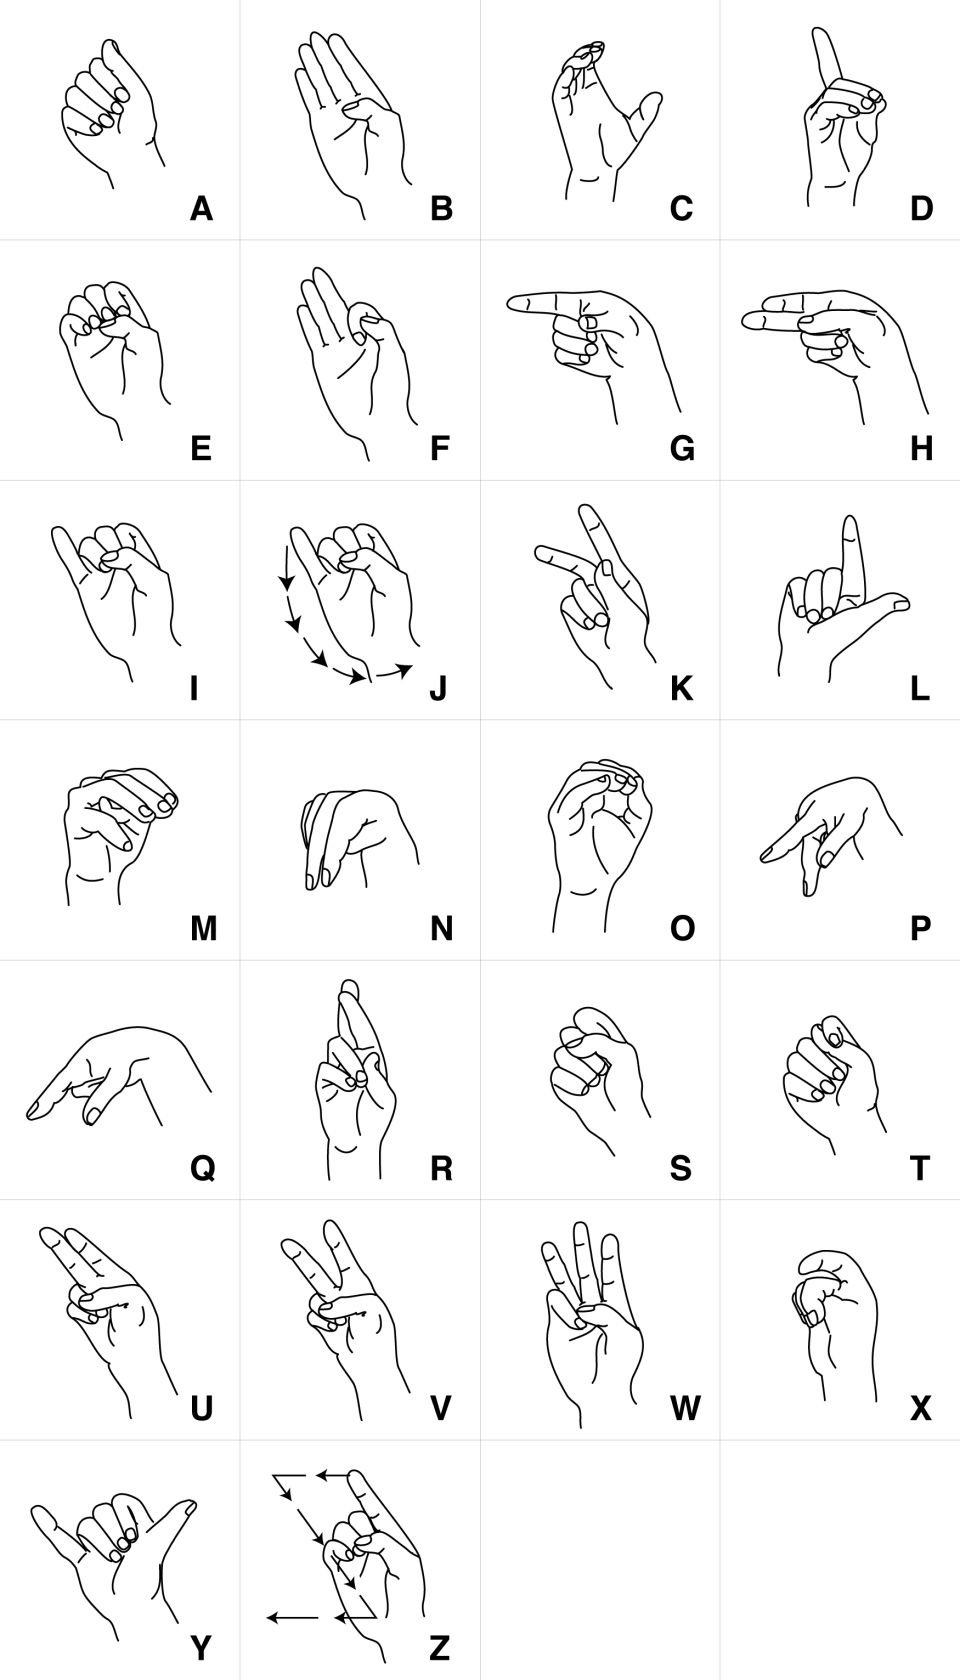 American Sign Language Alphabetâ¦ Free Vectors